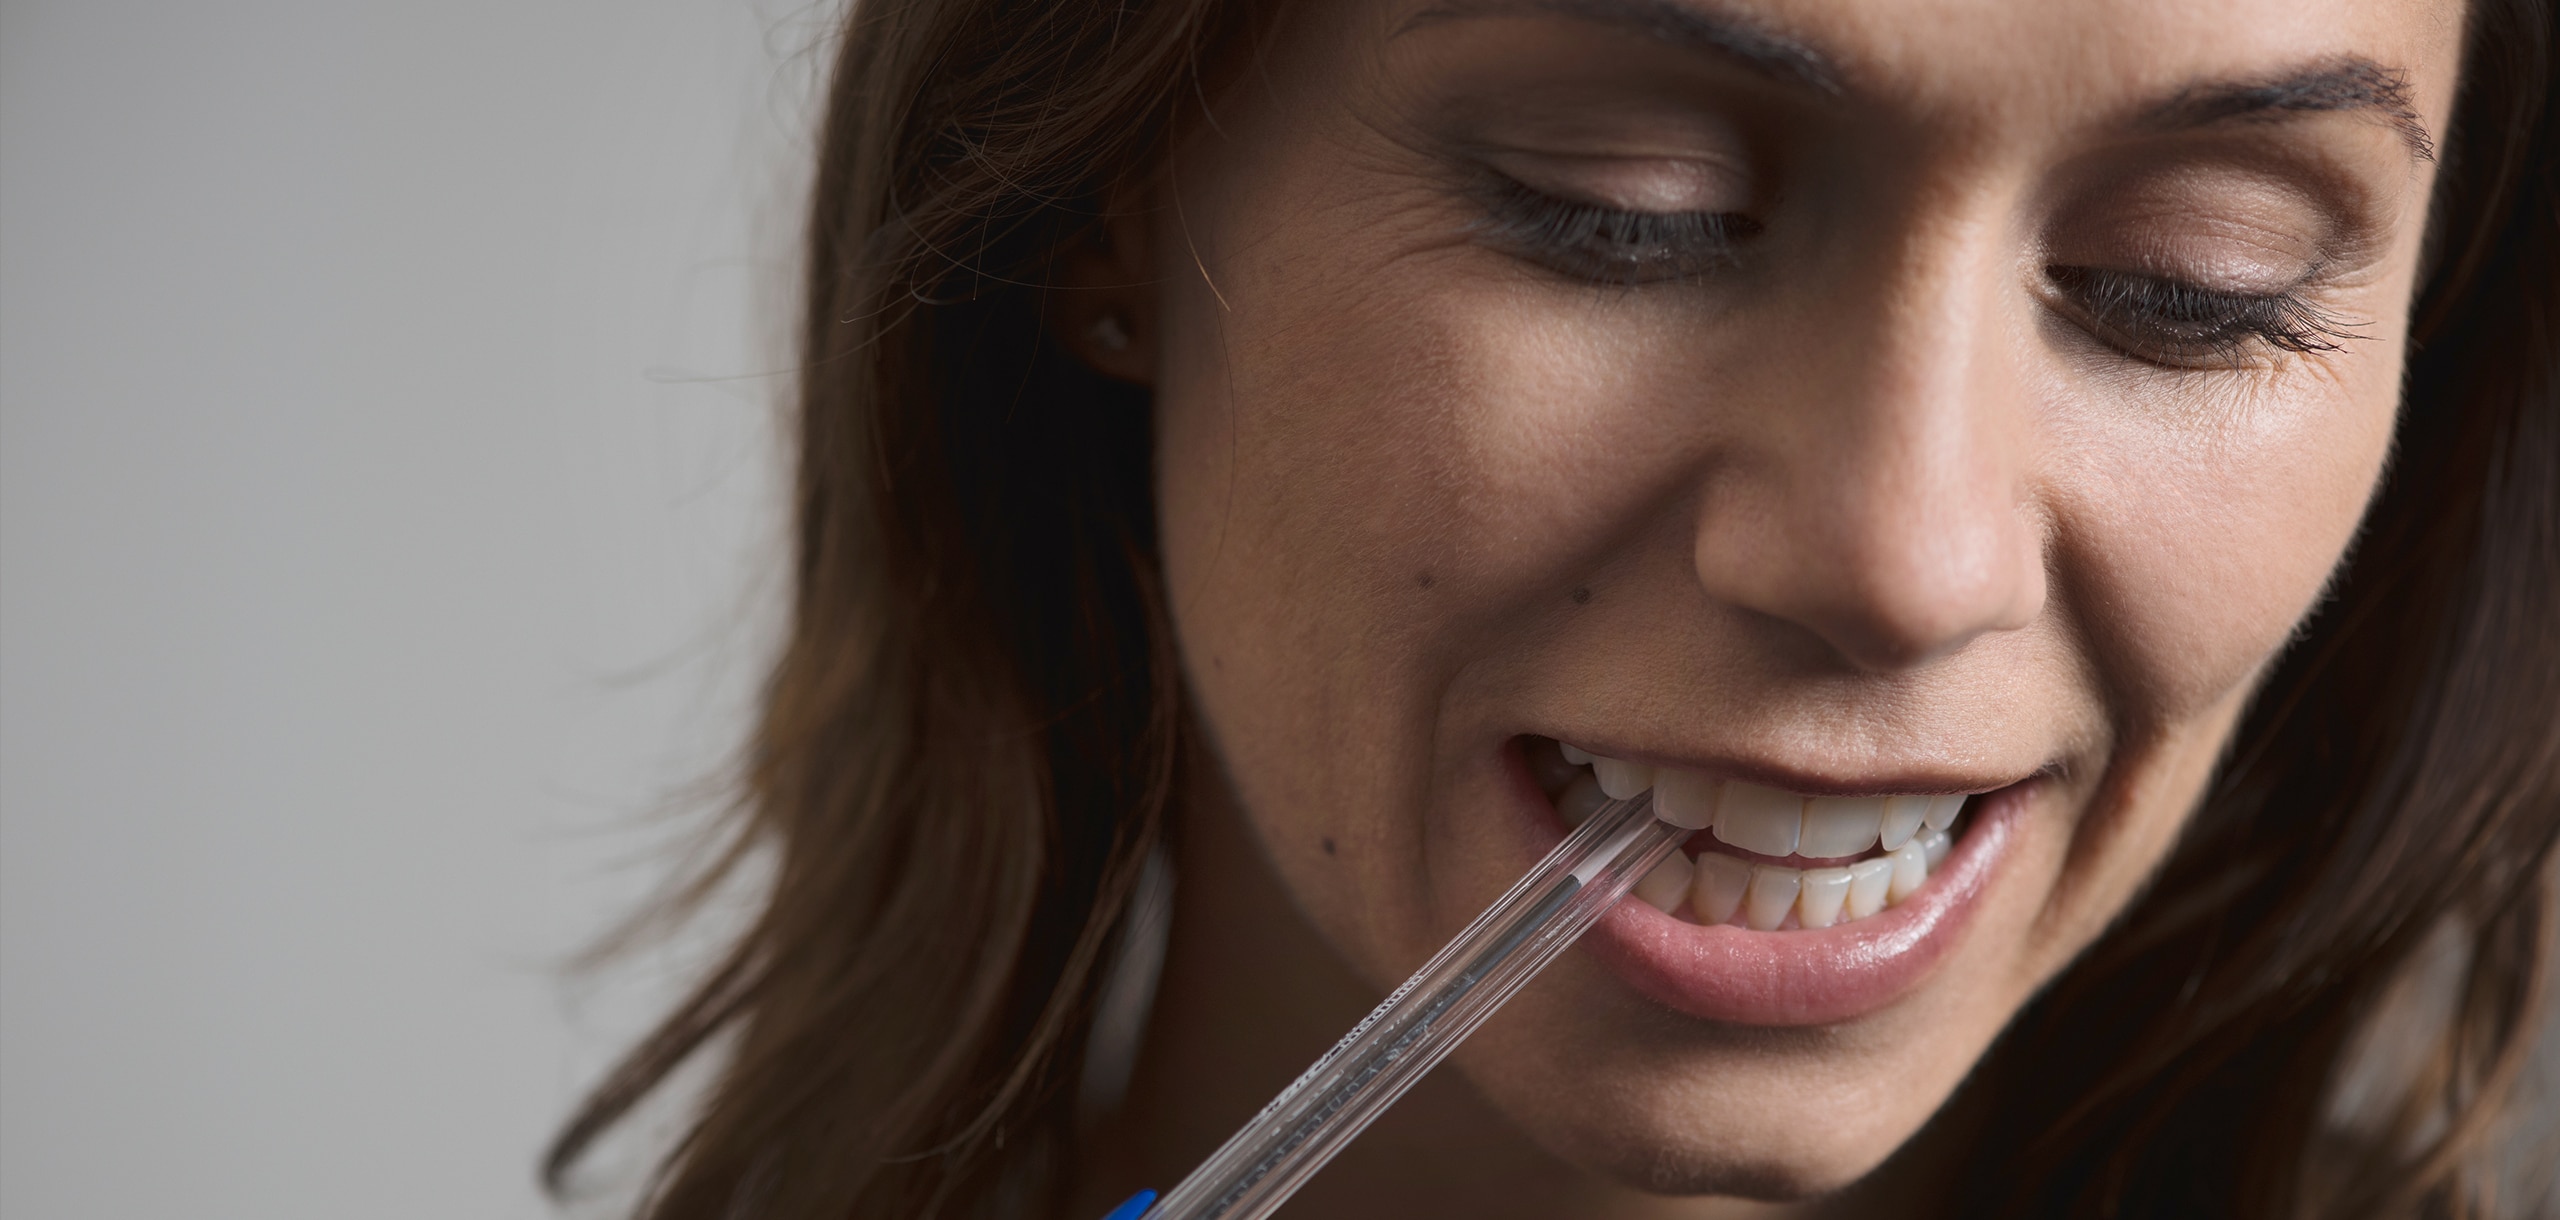 Habits that harm your teeth